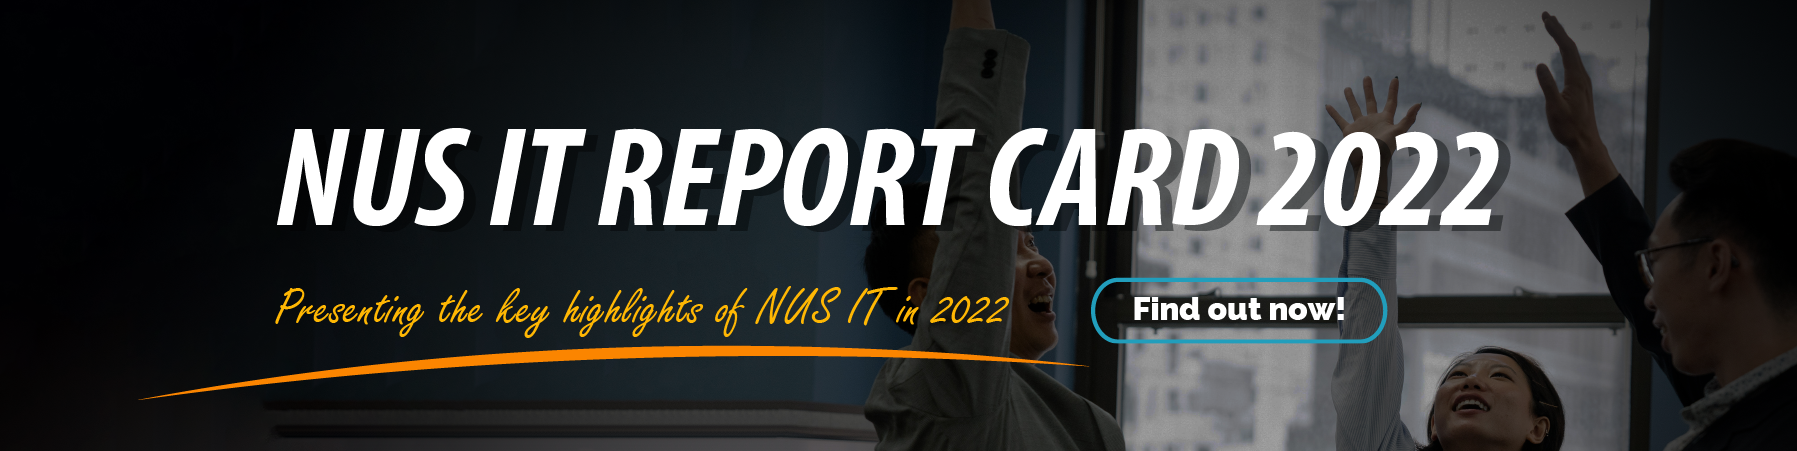 IT Report Card 2022